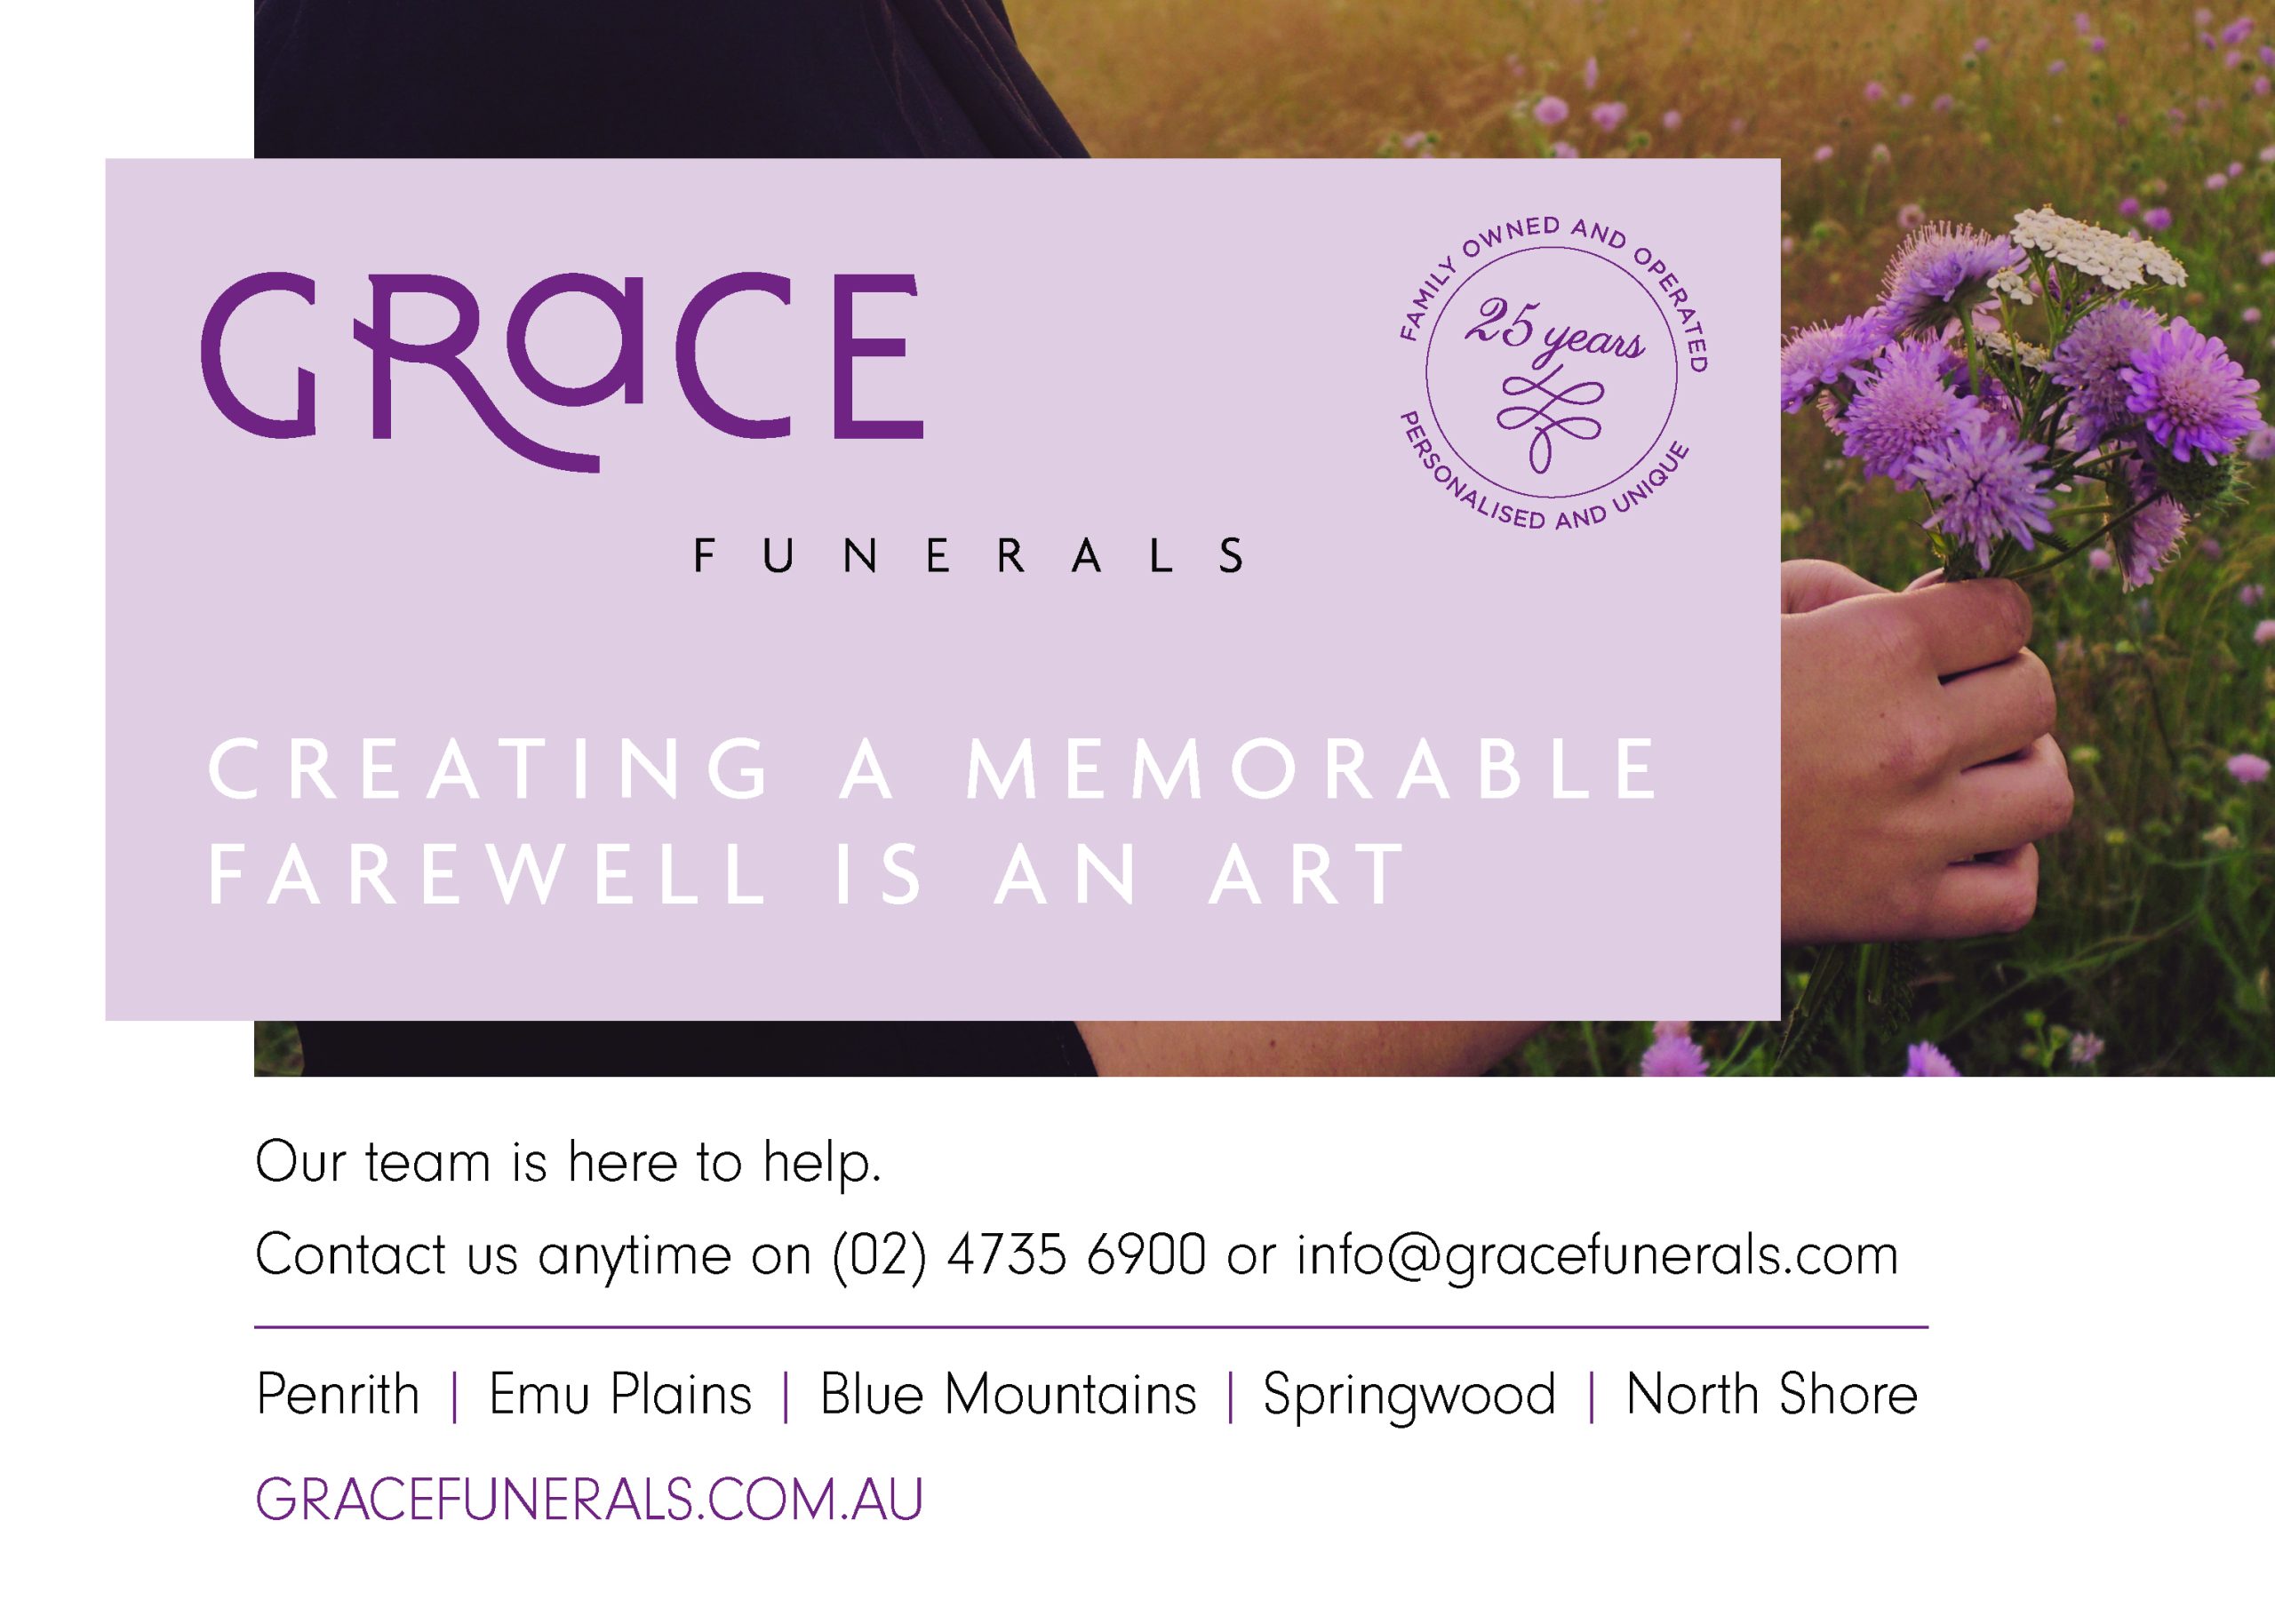 Grace Funerals